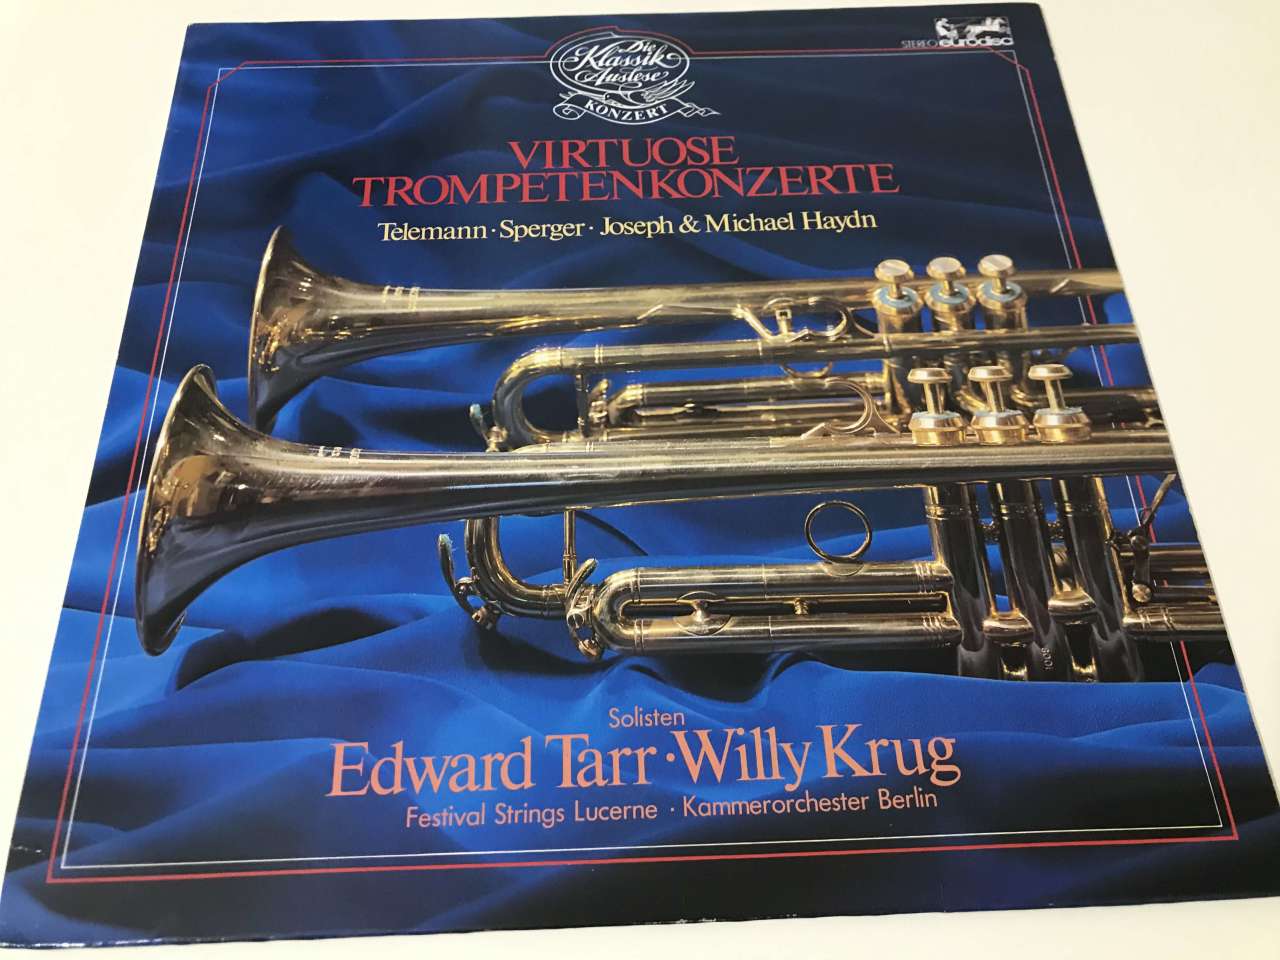 Virtuose Trompettenkonzerte - Telemann,Sperger,Joseph & Michael Haydn - Edward Tarr, Willly Krug